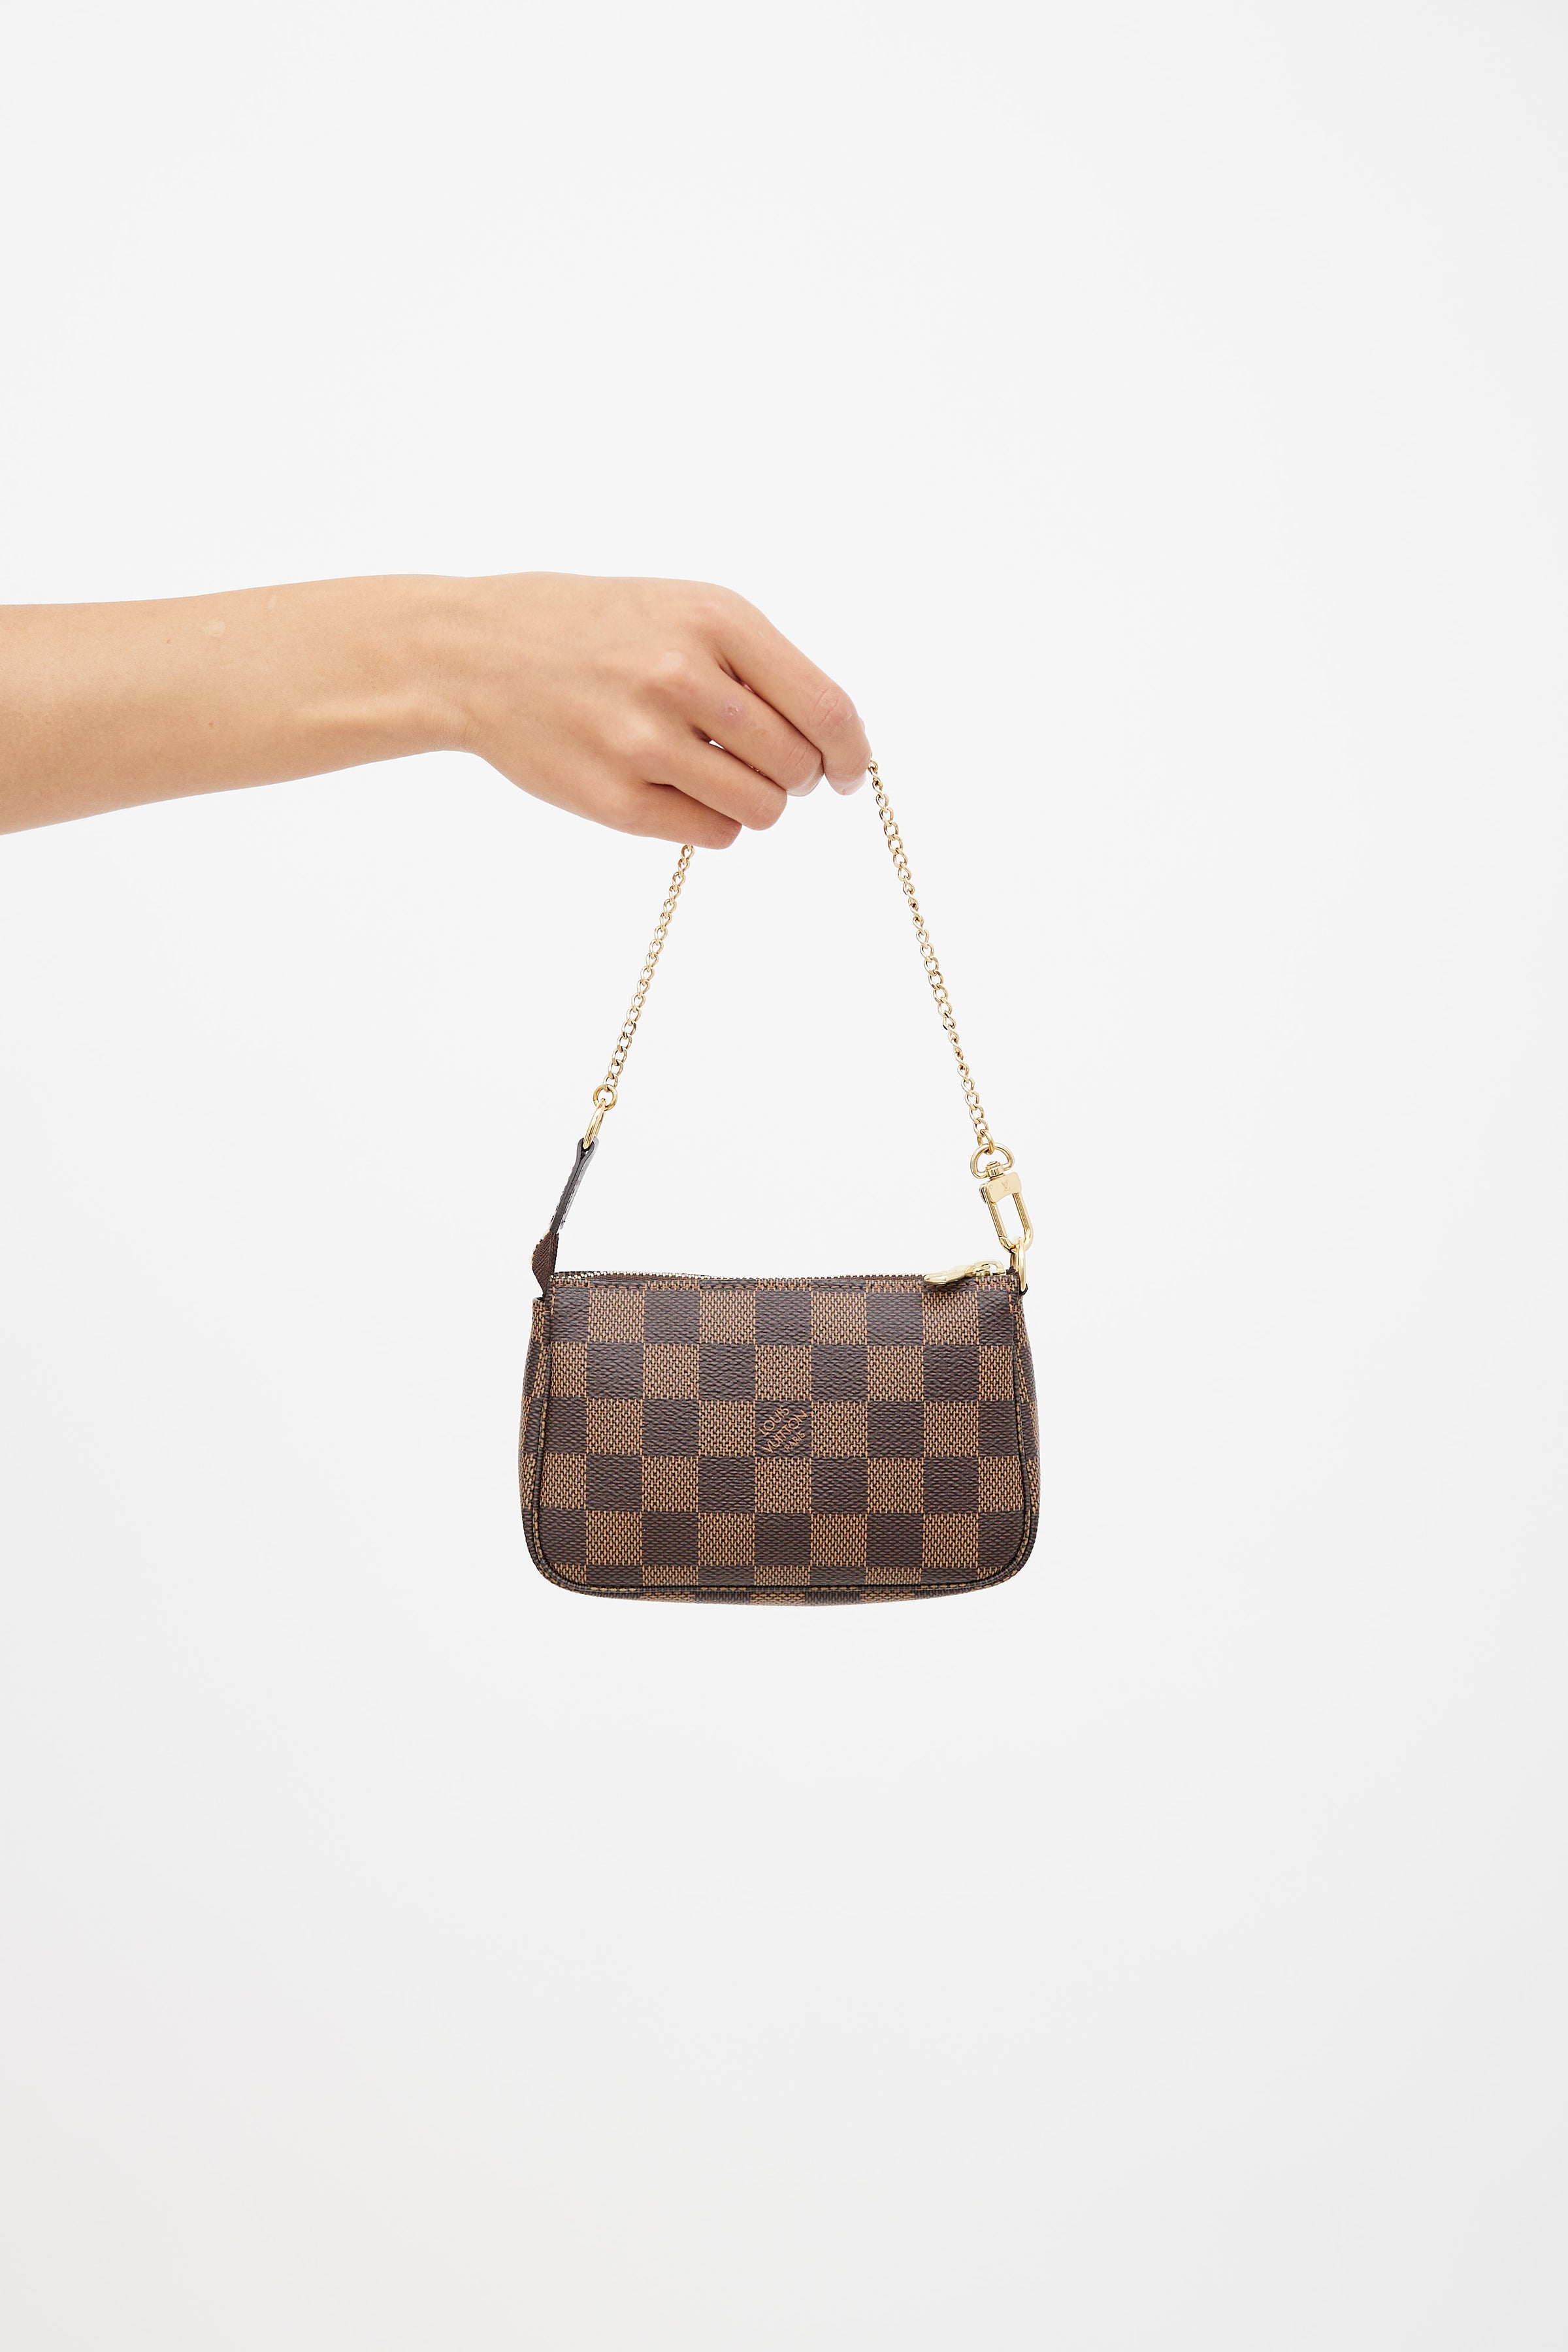 How To Spot Fake Louis Vuitton Multi Pochette Accessoires  Bag Review   Youtube video